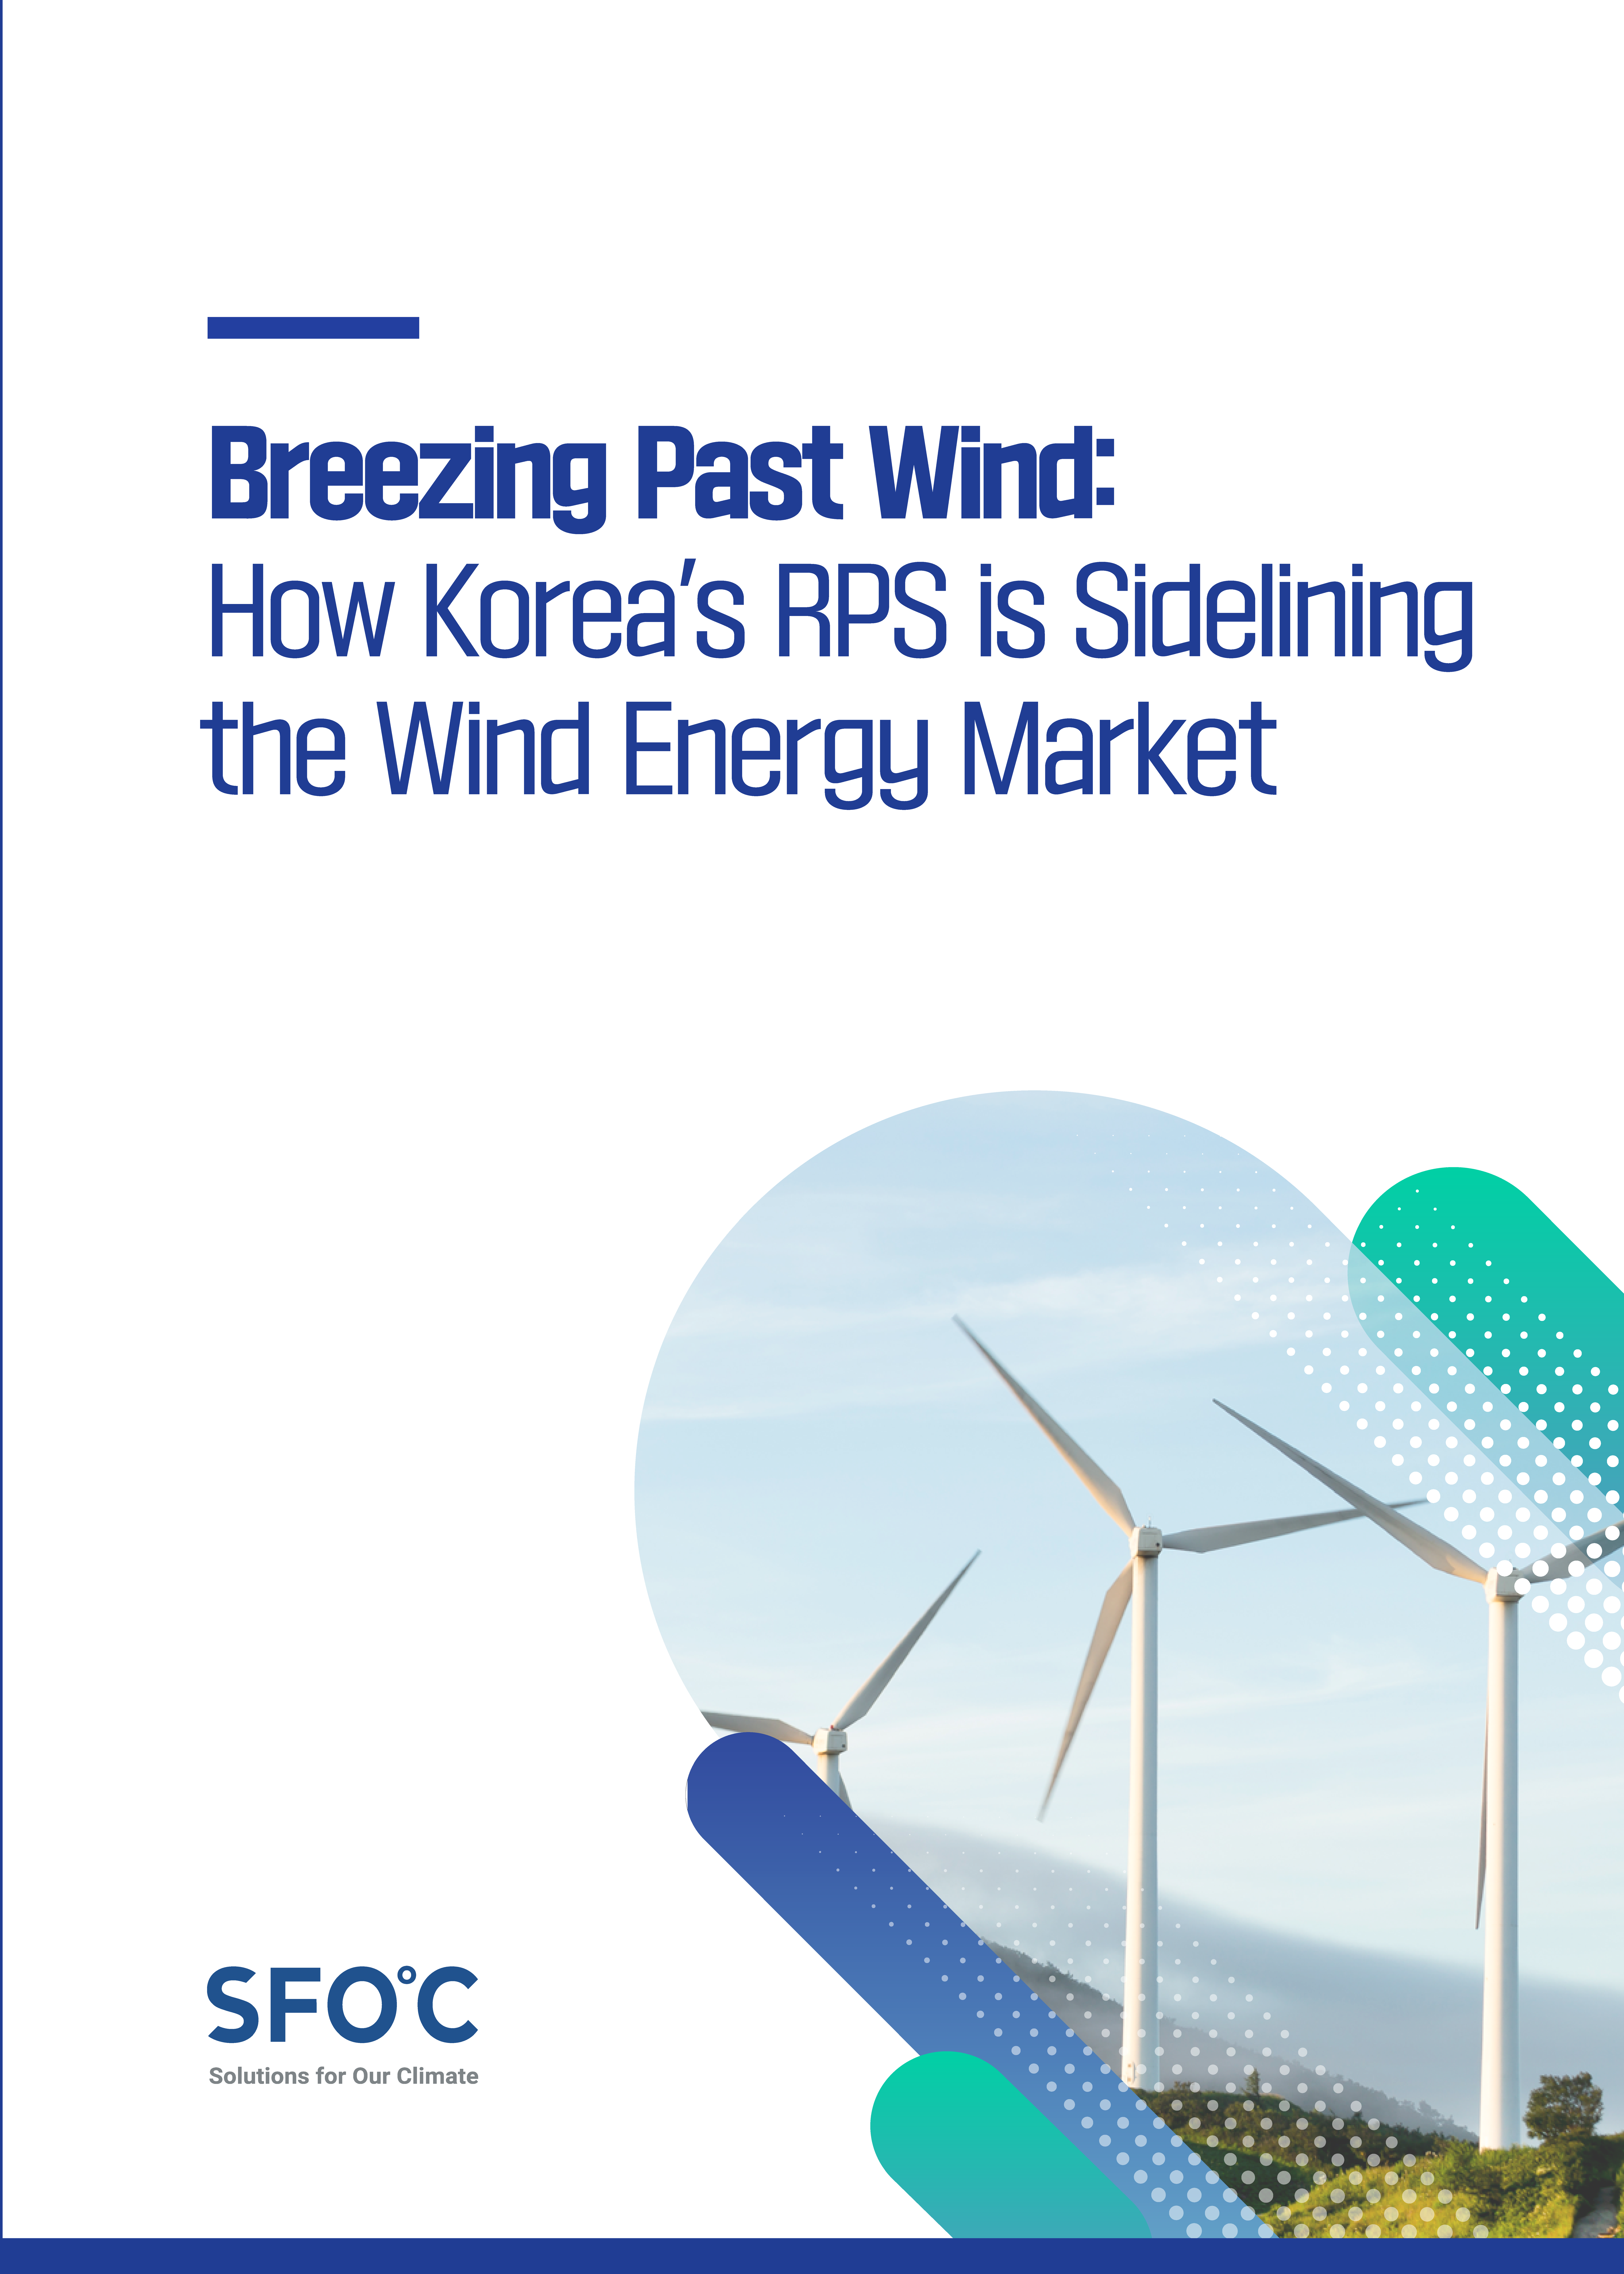 Breezing Past Wind_How Korea’s RPS is Sidelining